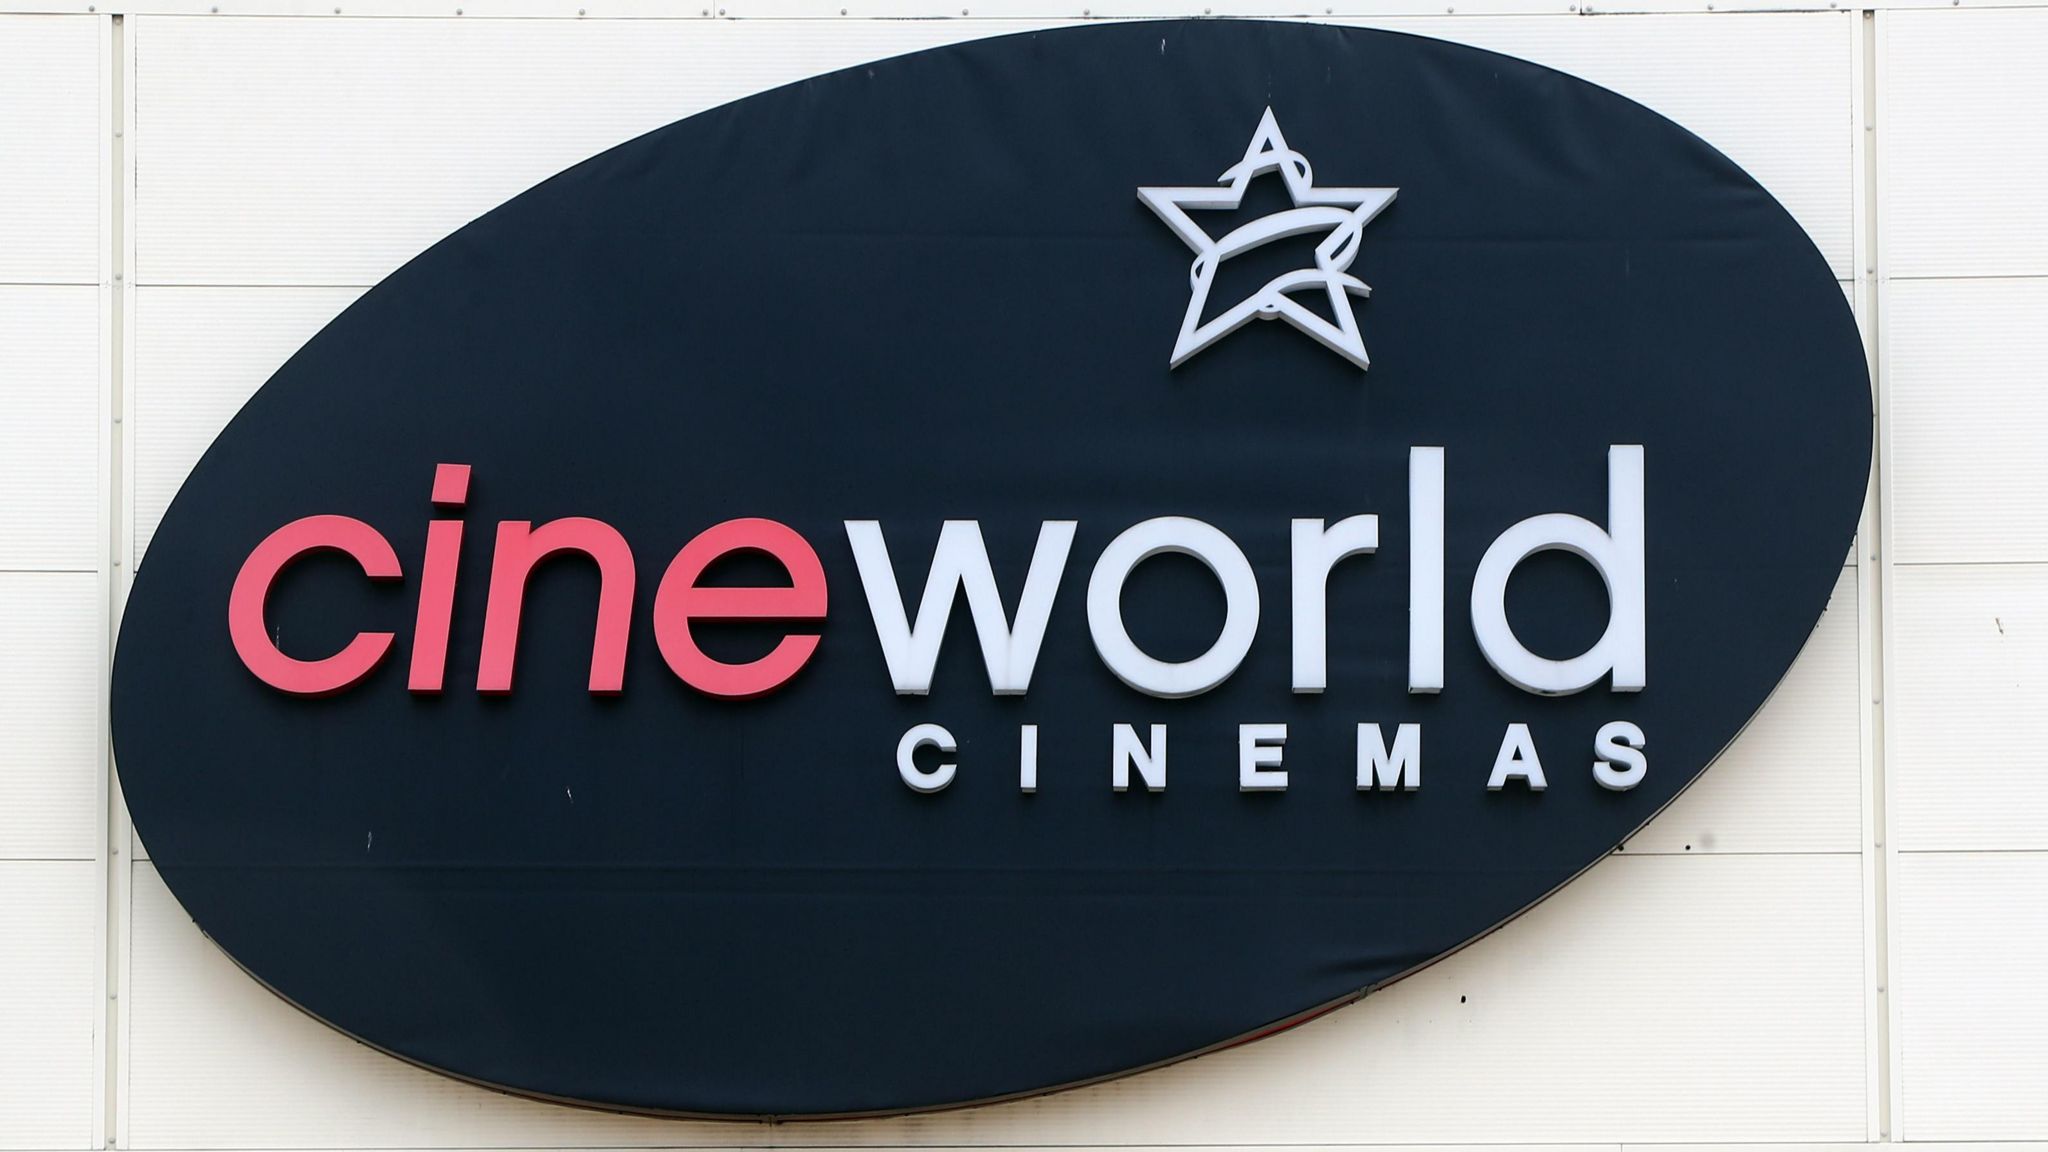 Cineworld cinemas sign